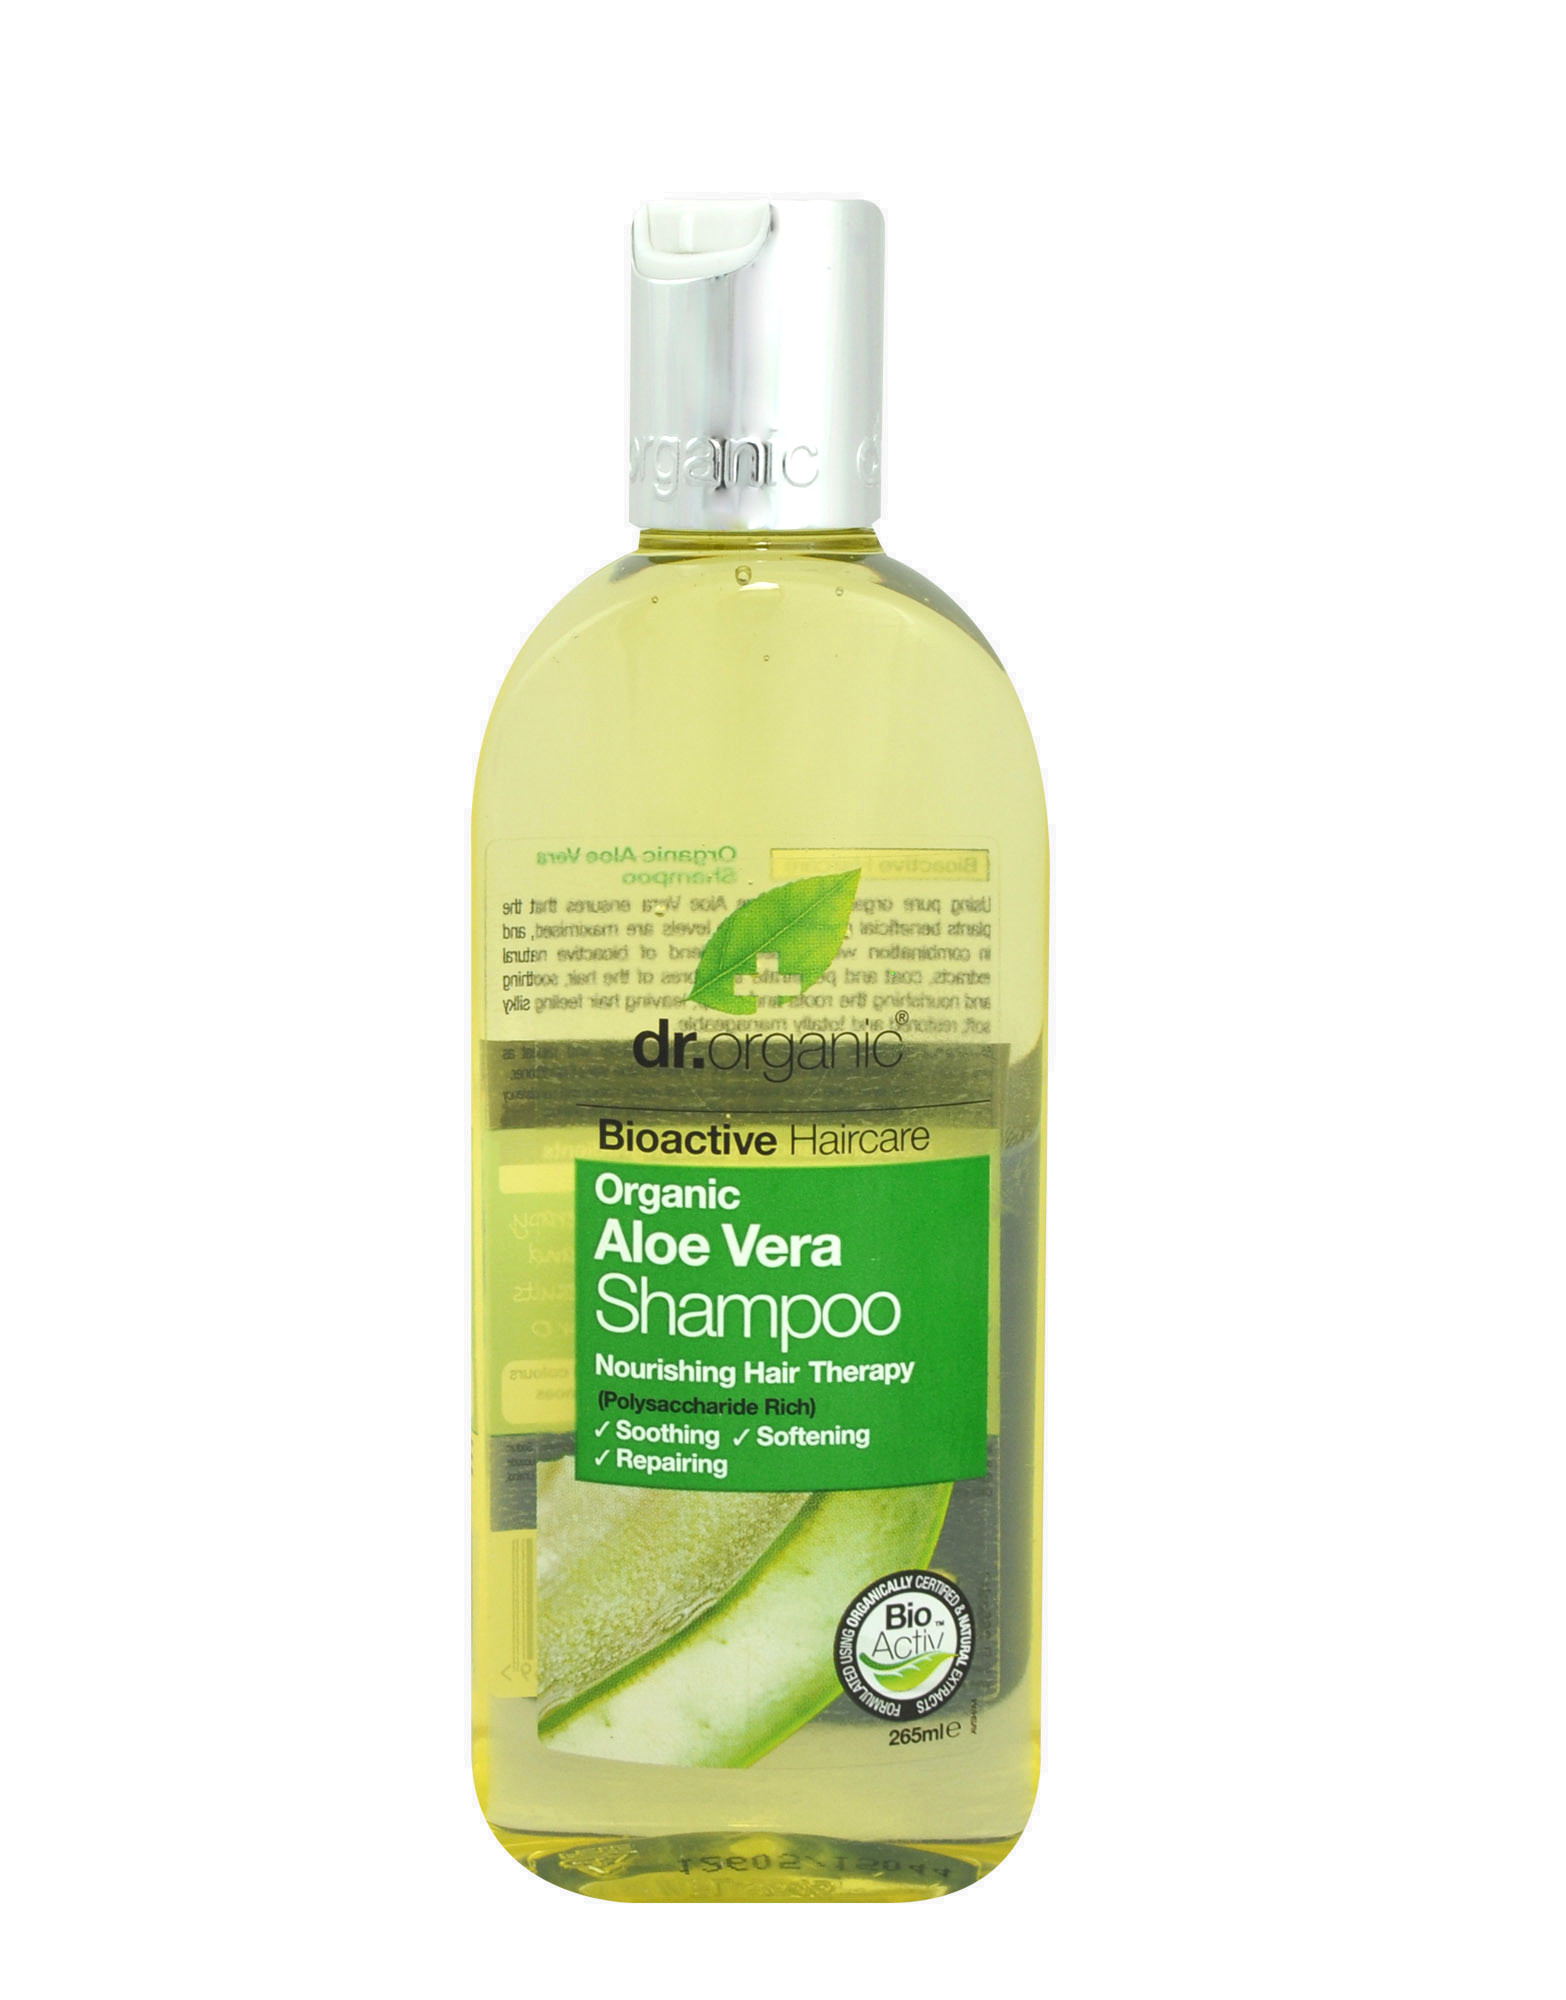 Organic Aloe Vera - Shampoo by DR. ORGANIC (265ml)